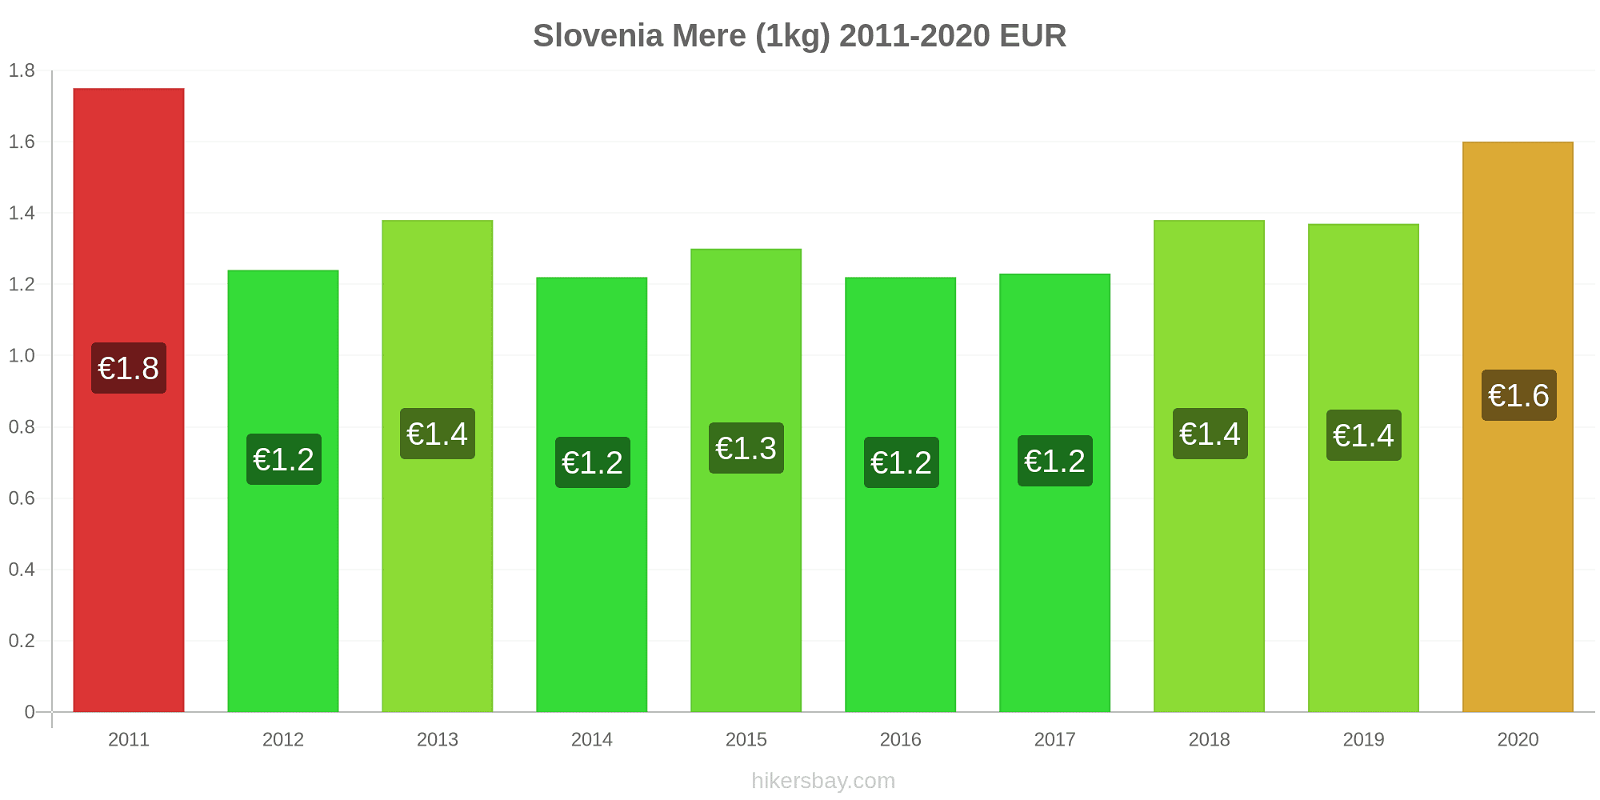 Slovenia modificări de preț Mere (1kg) hikersbay.com